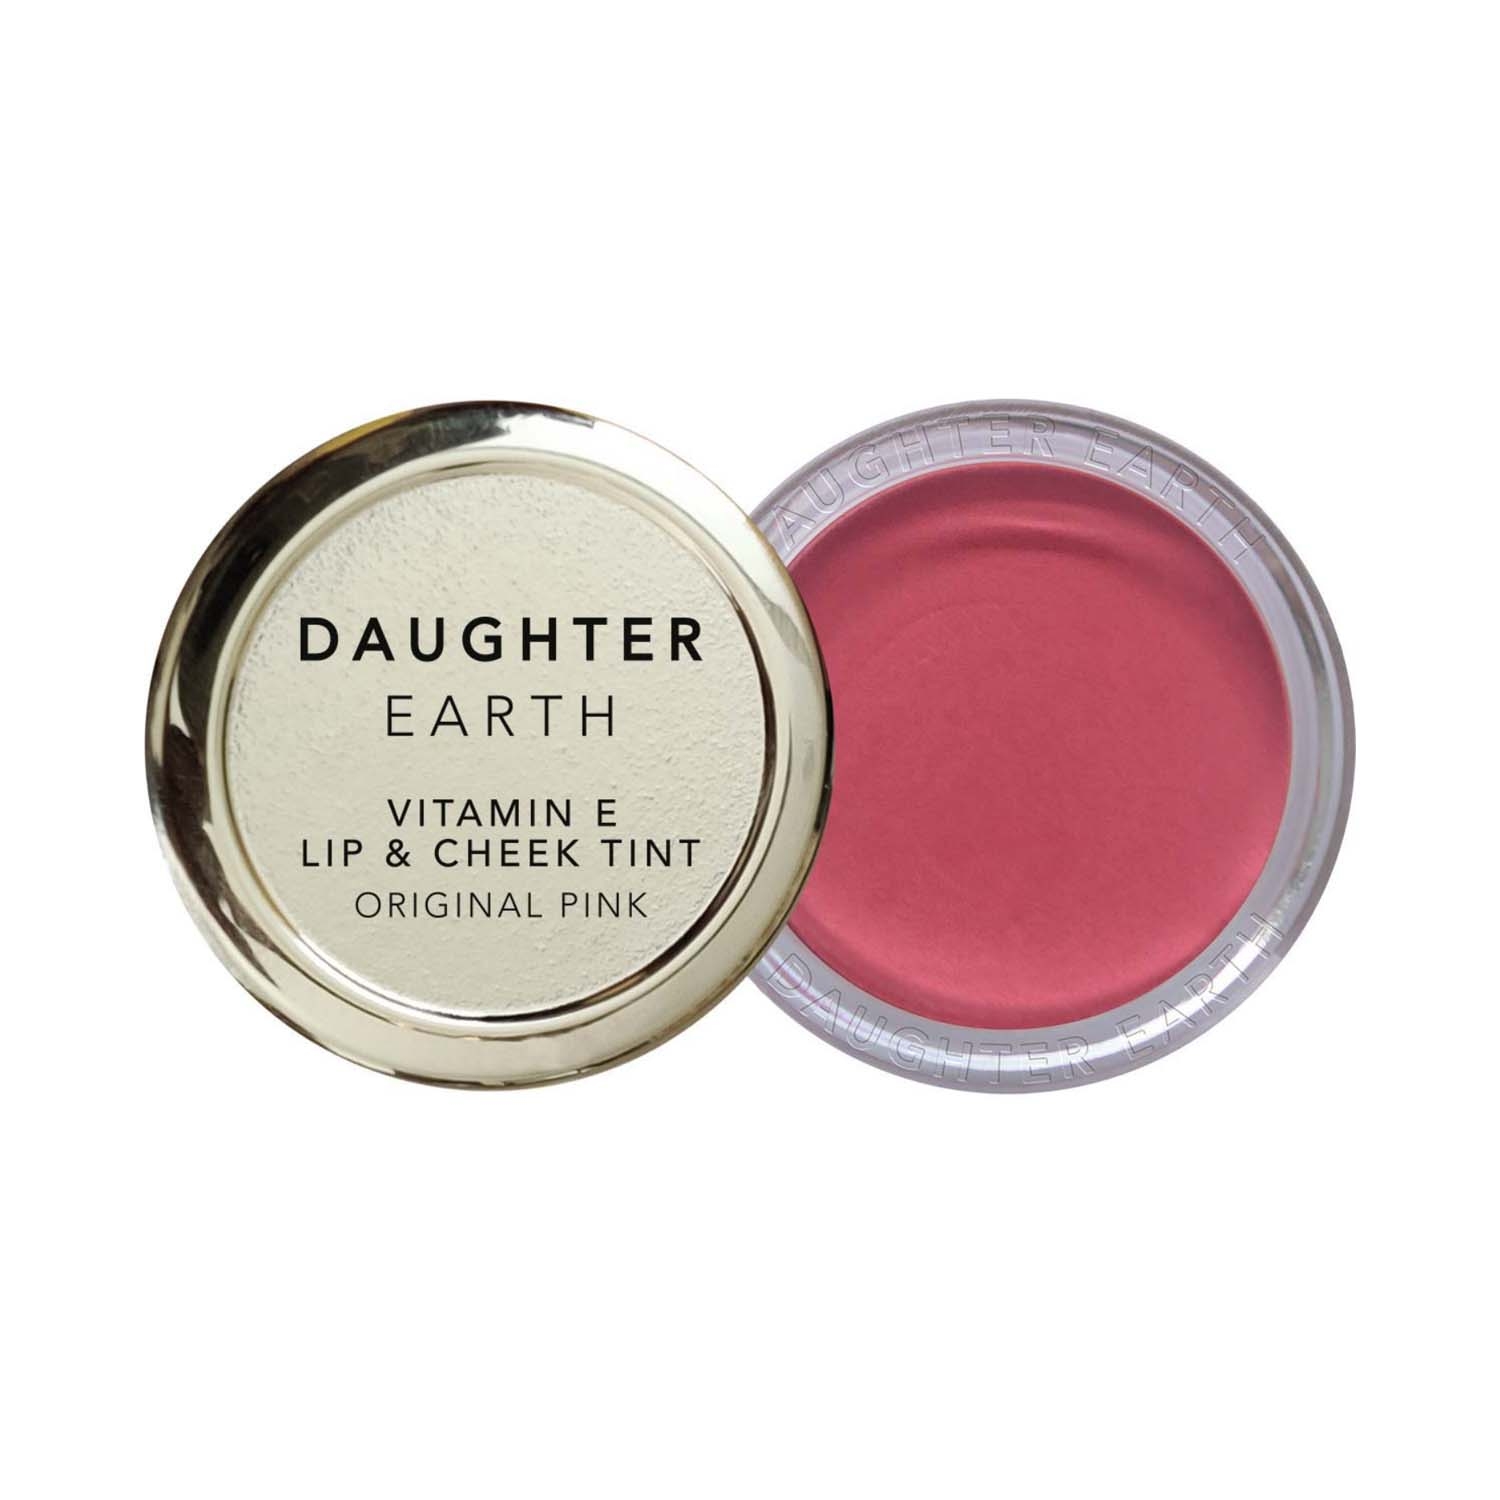  | DAUGHTER EARTH Vitamin E Lip & Cheek Tint - The Original Pink (4.5g)